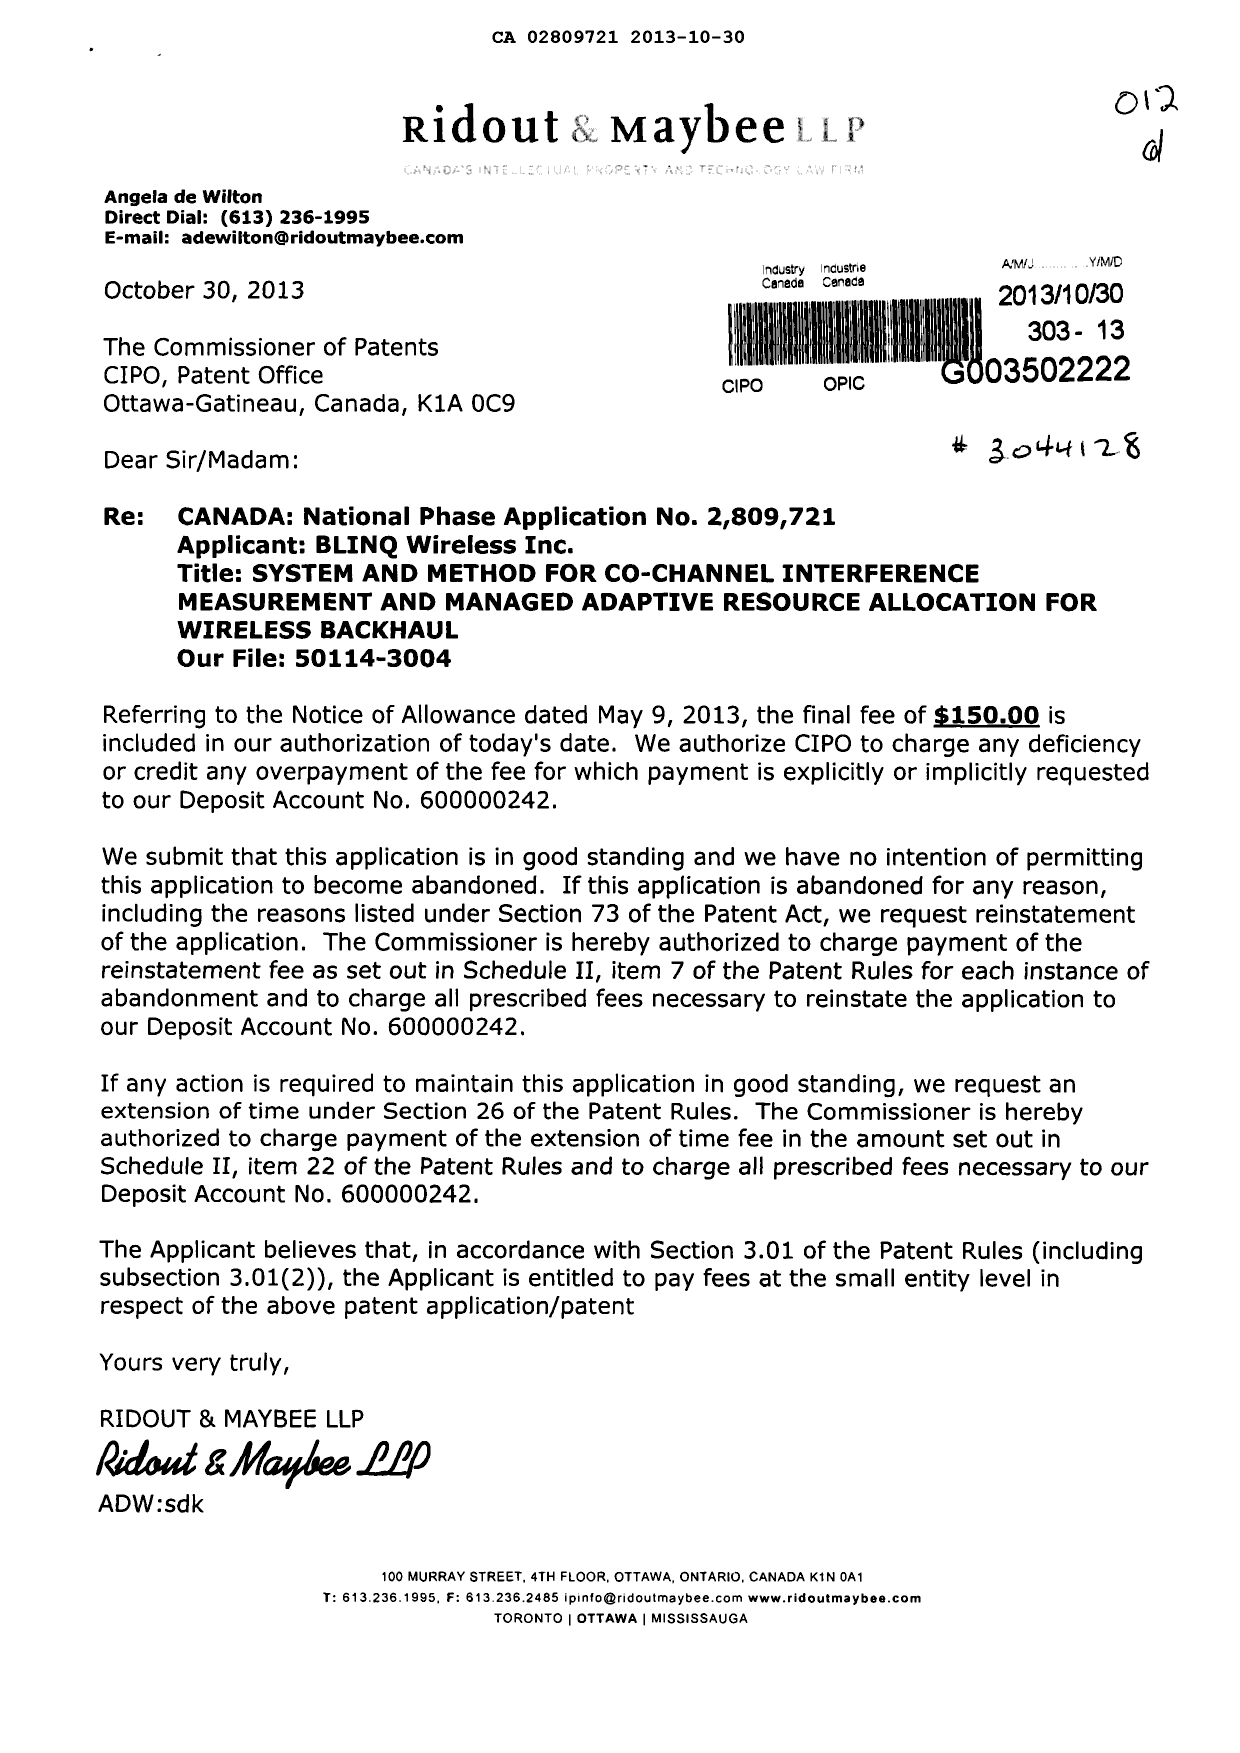 Canadian Patent Document 2809721. Correspondence 20131030. Image 1 of 1